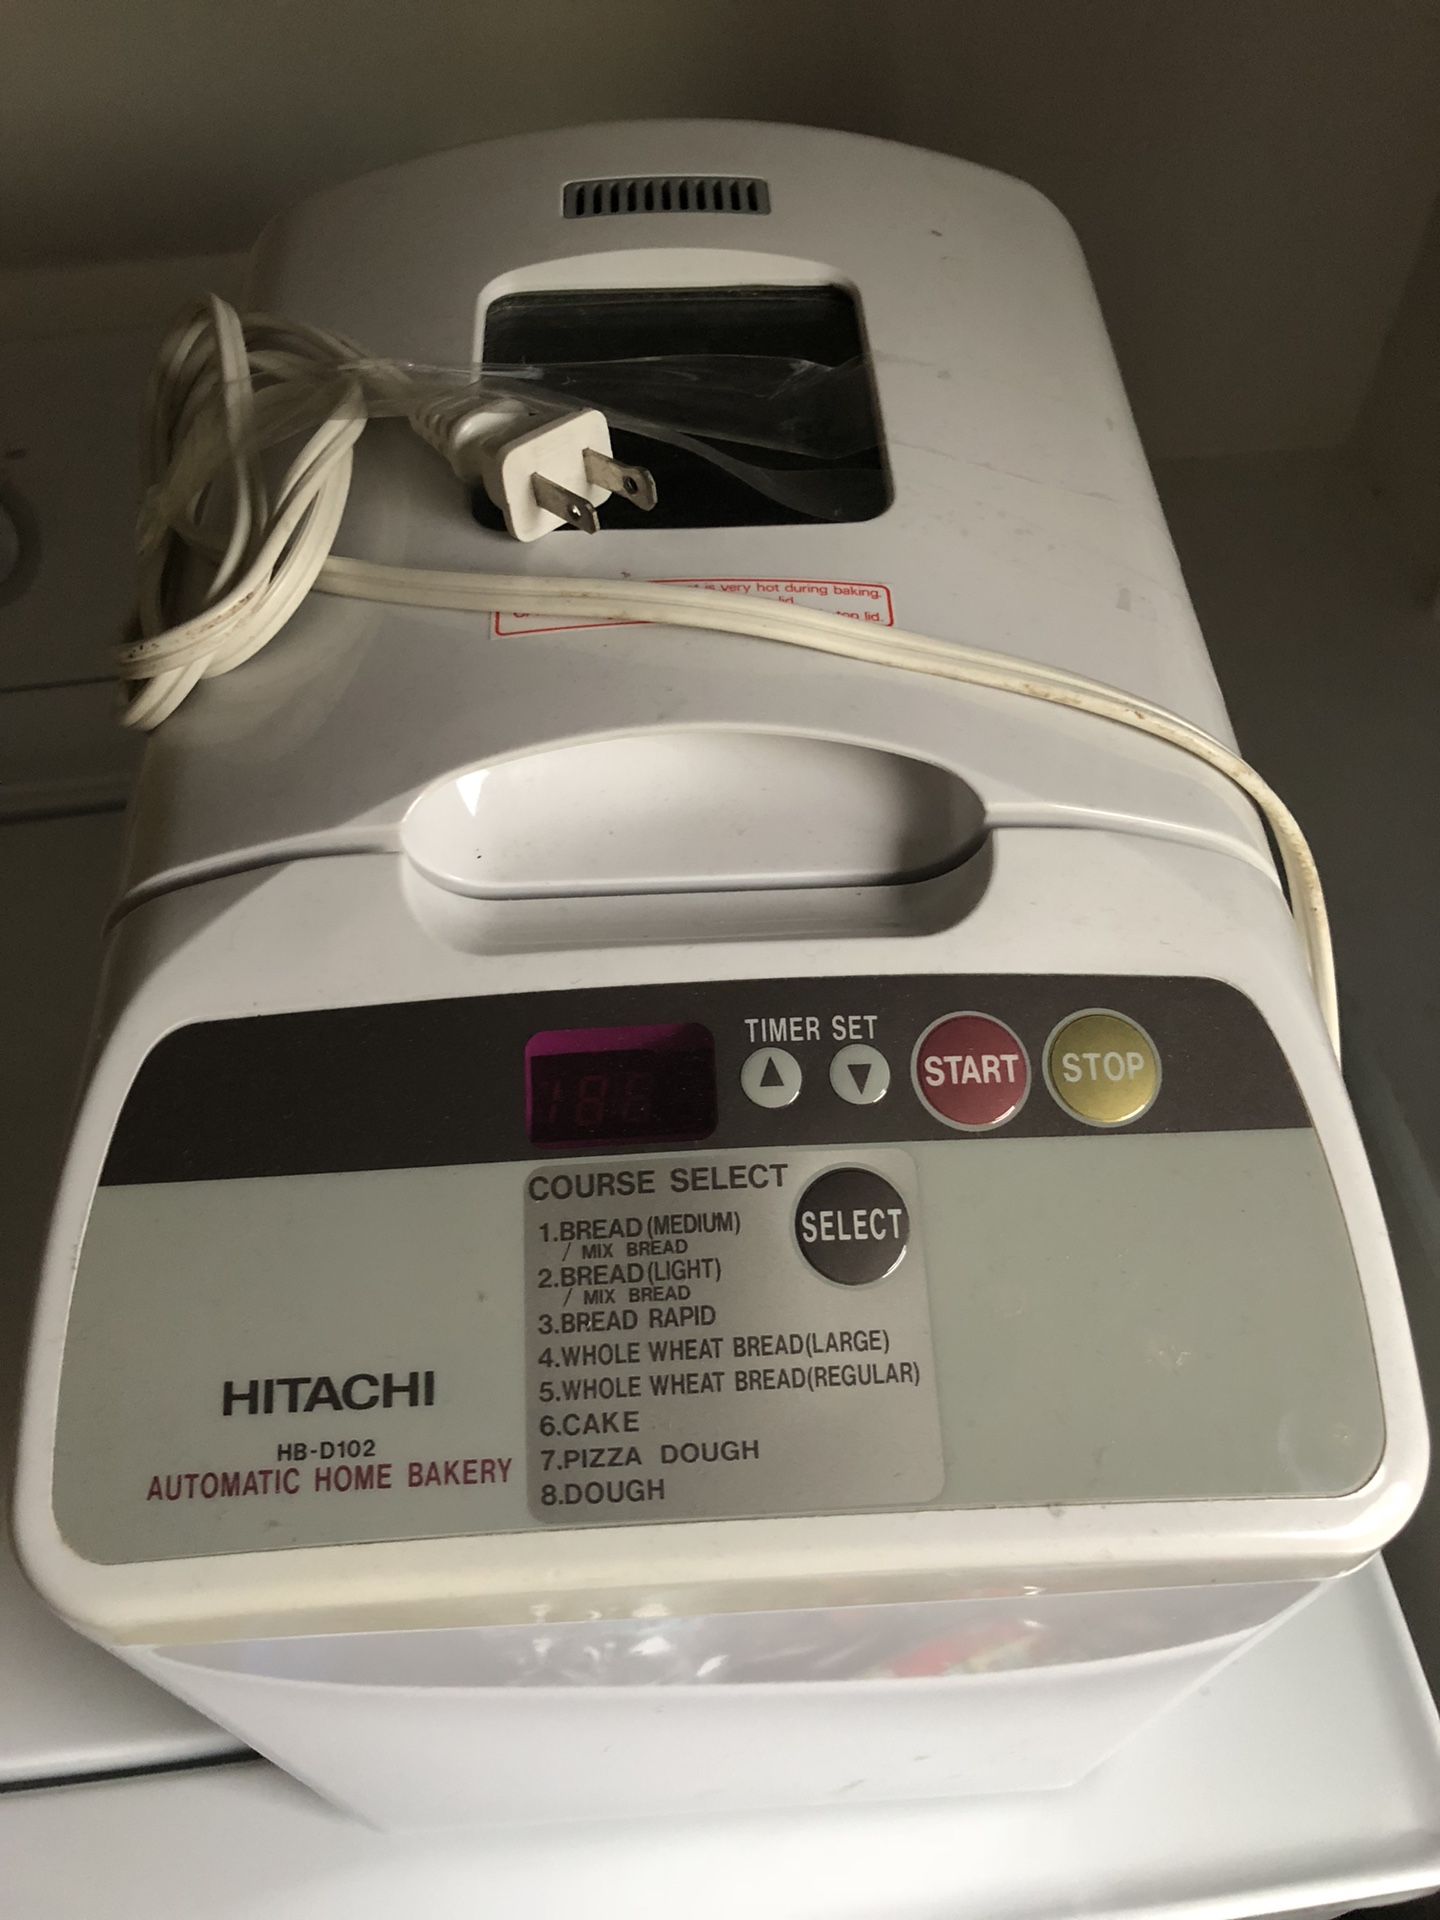 Hitachi HB-D102 Automatic Home Bakery Bread Maker Machine